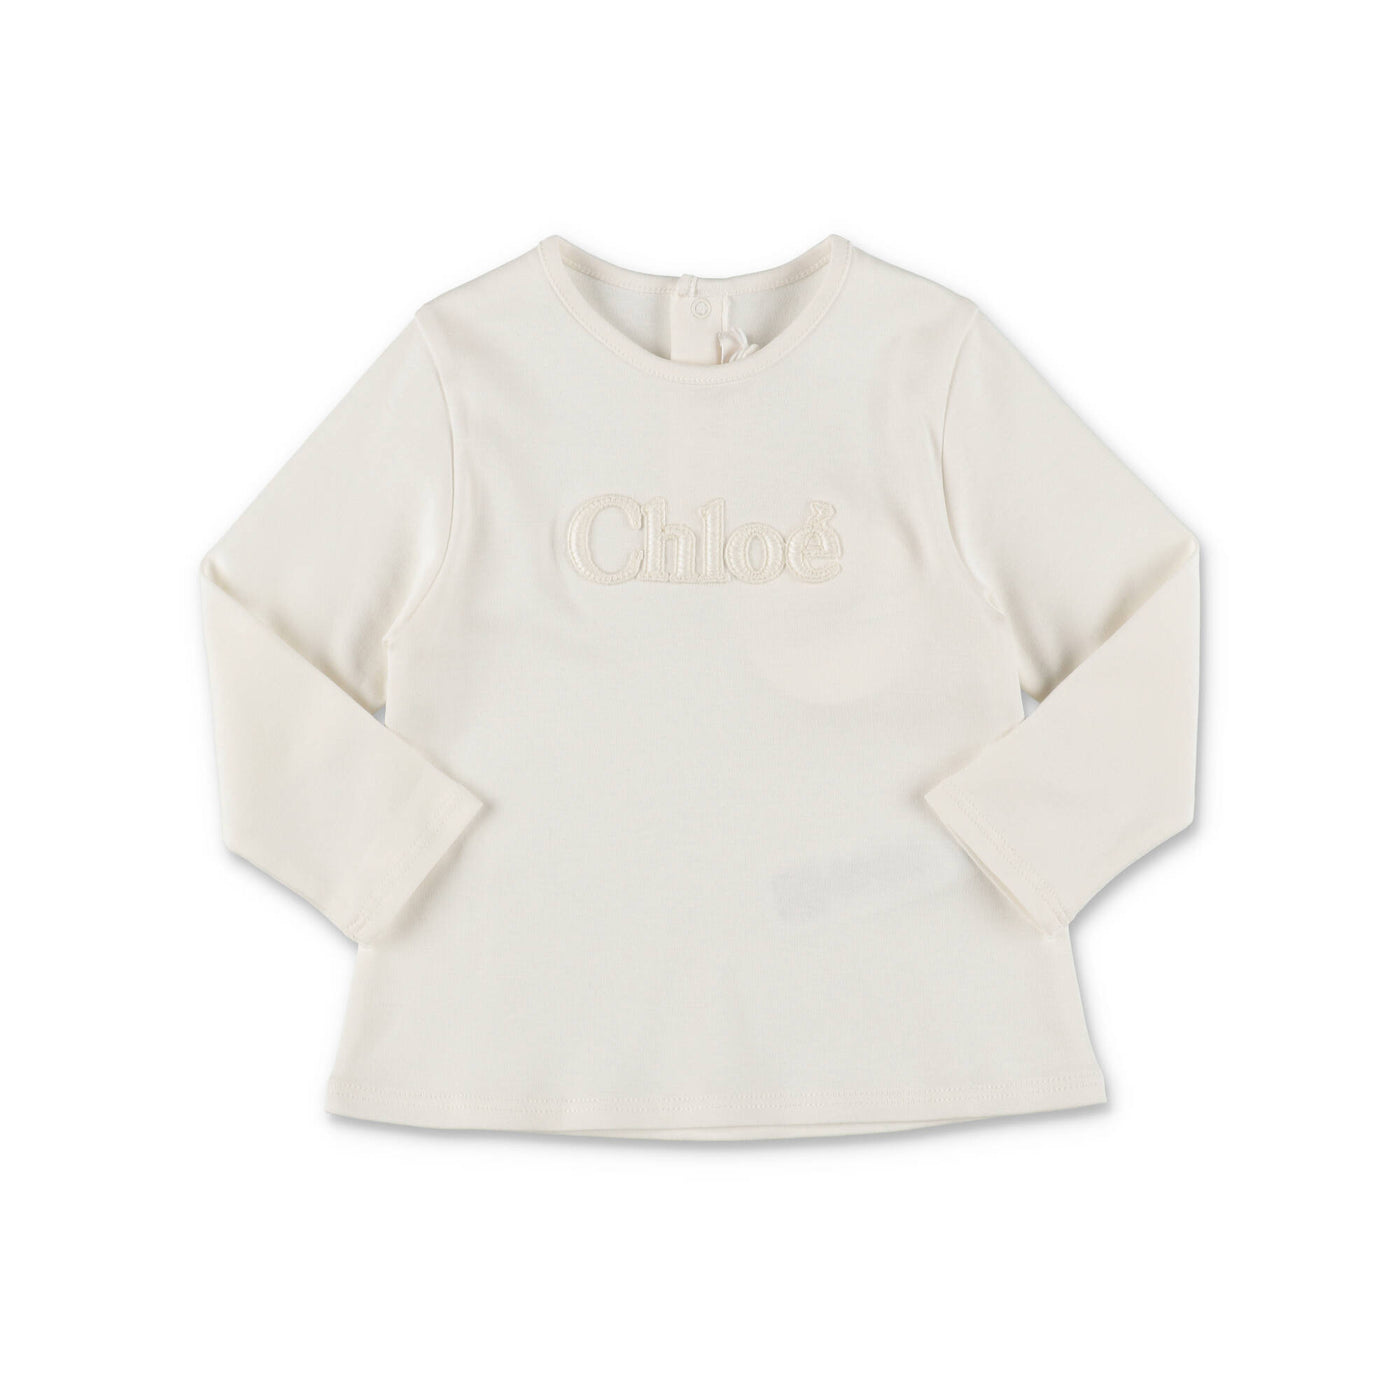 White cotton jersey baby girl CHLOE' t-shirt